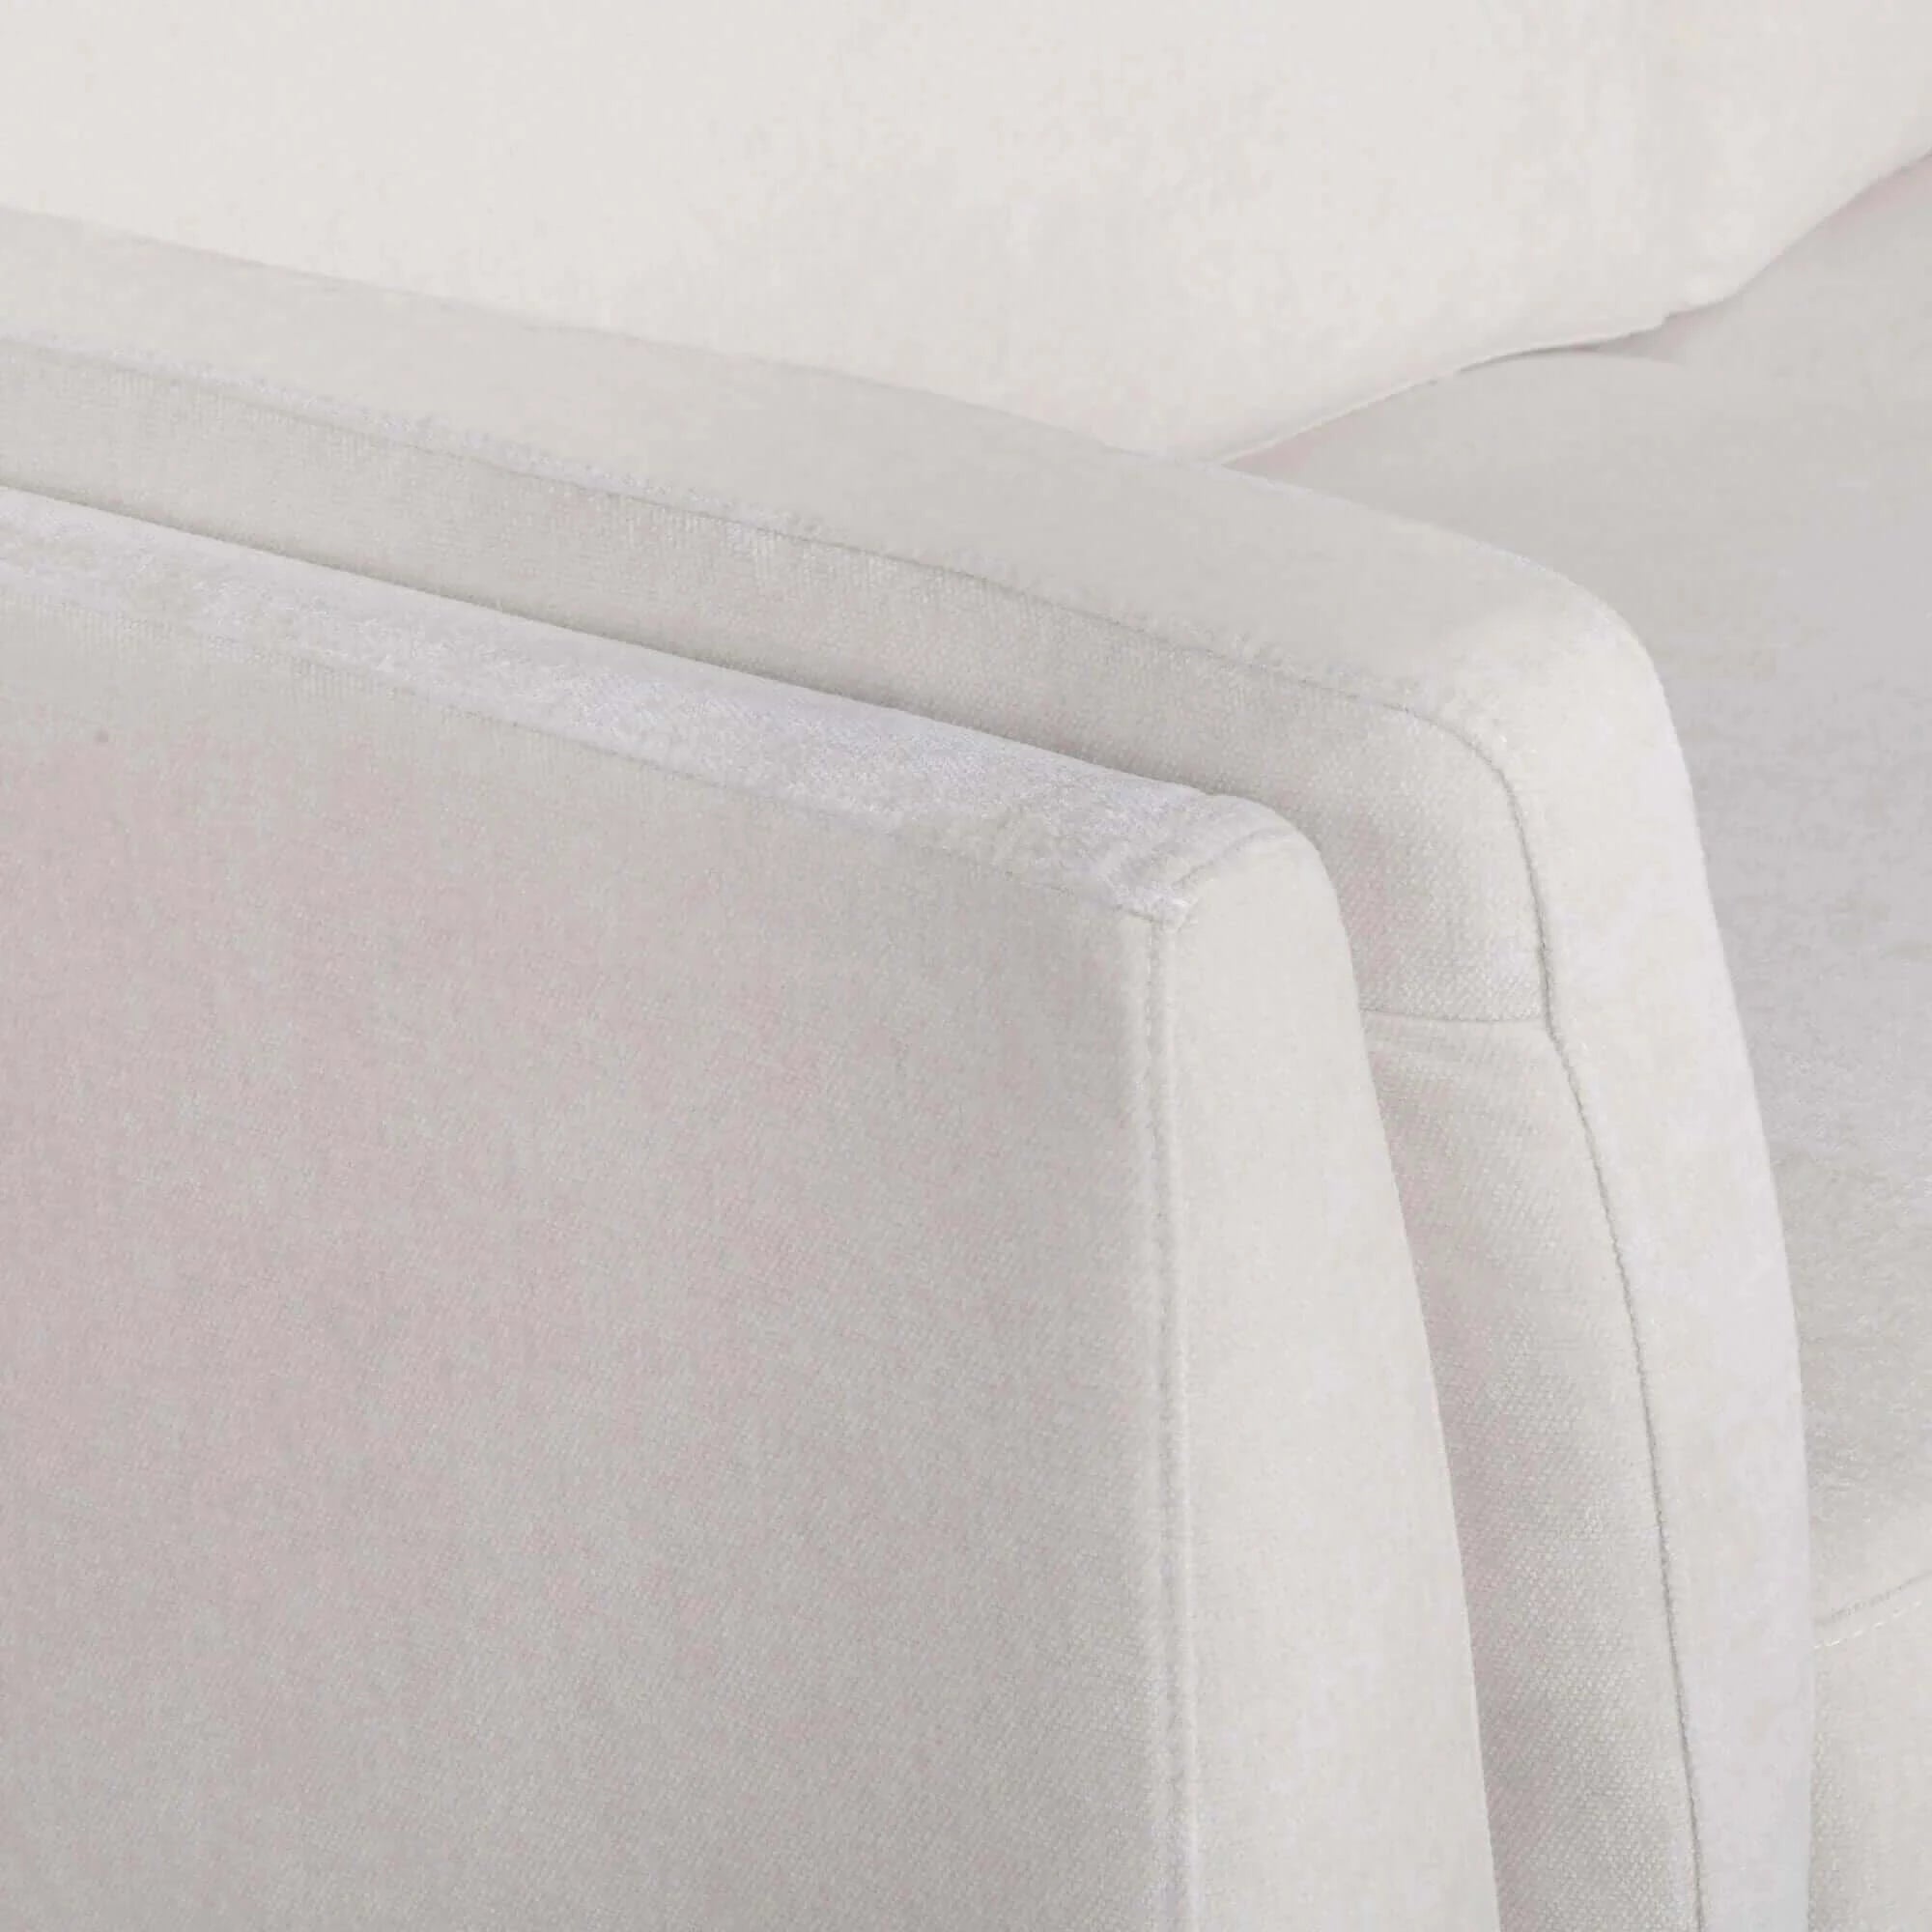 Buy nooa 3 seater sofa fabric uplholstered lounge couch - stone - upinteriors-Upinteriors